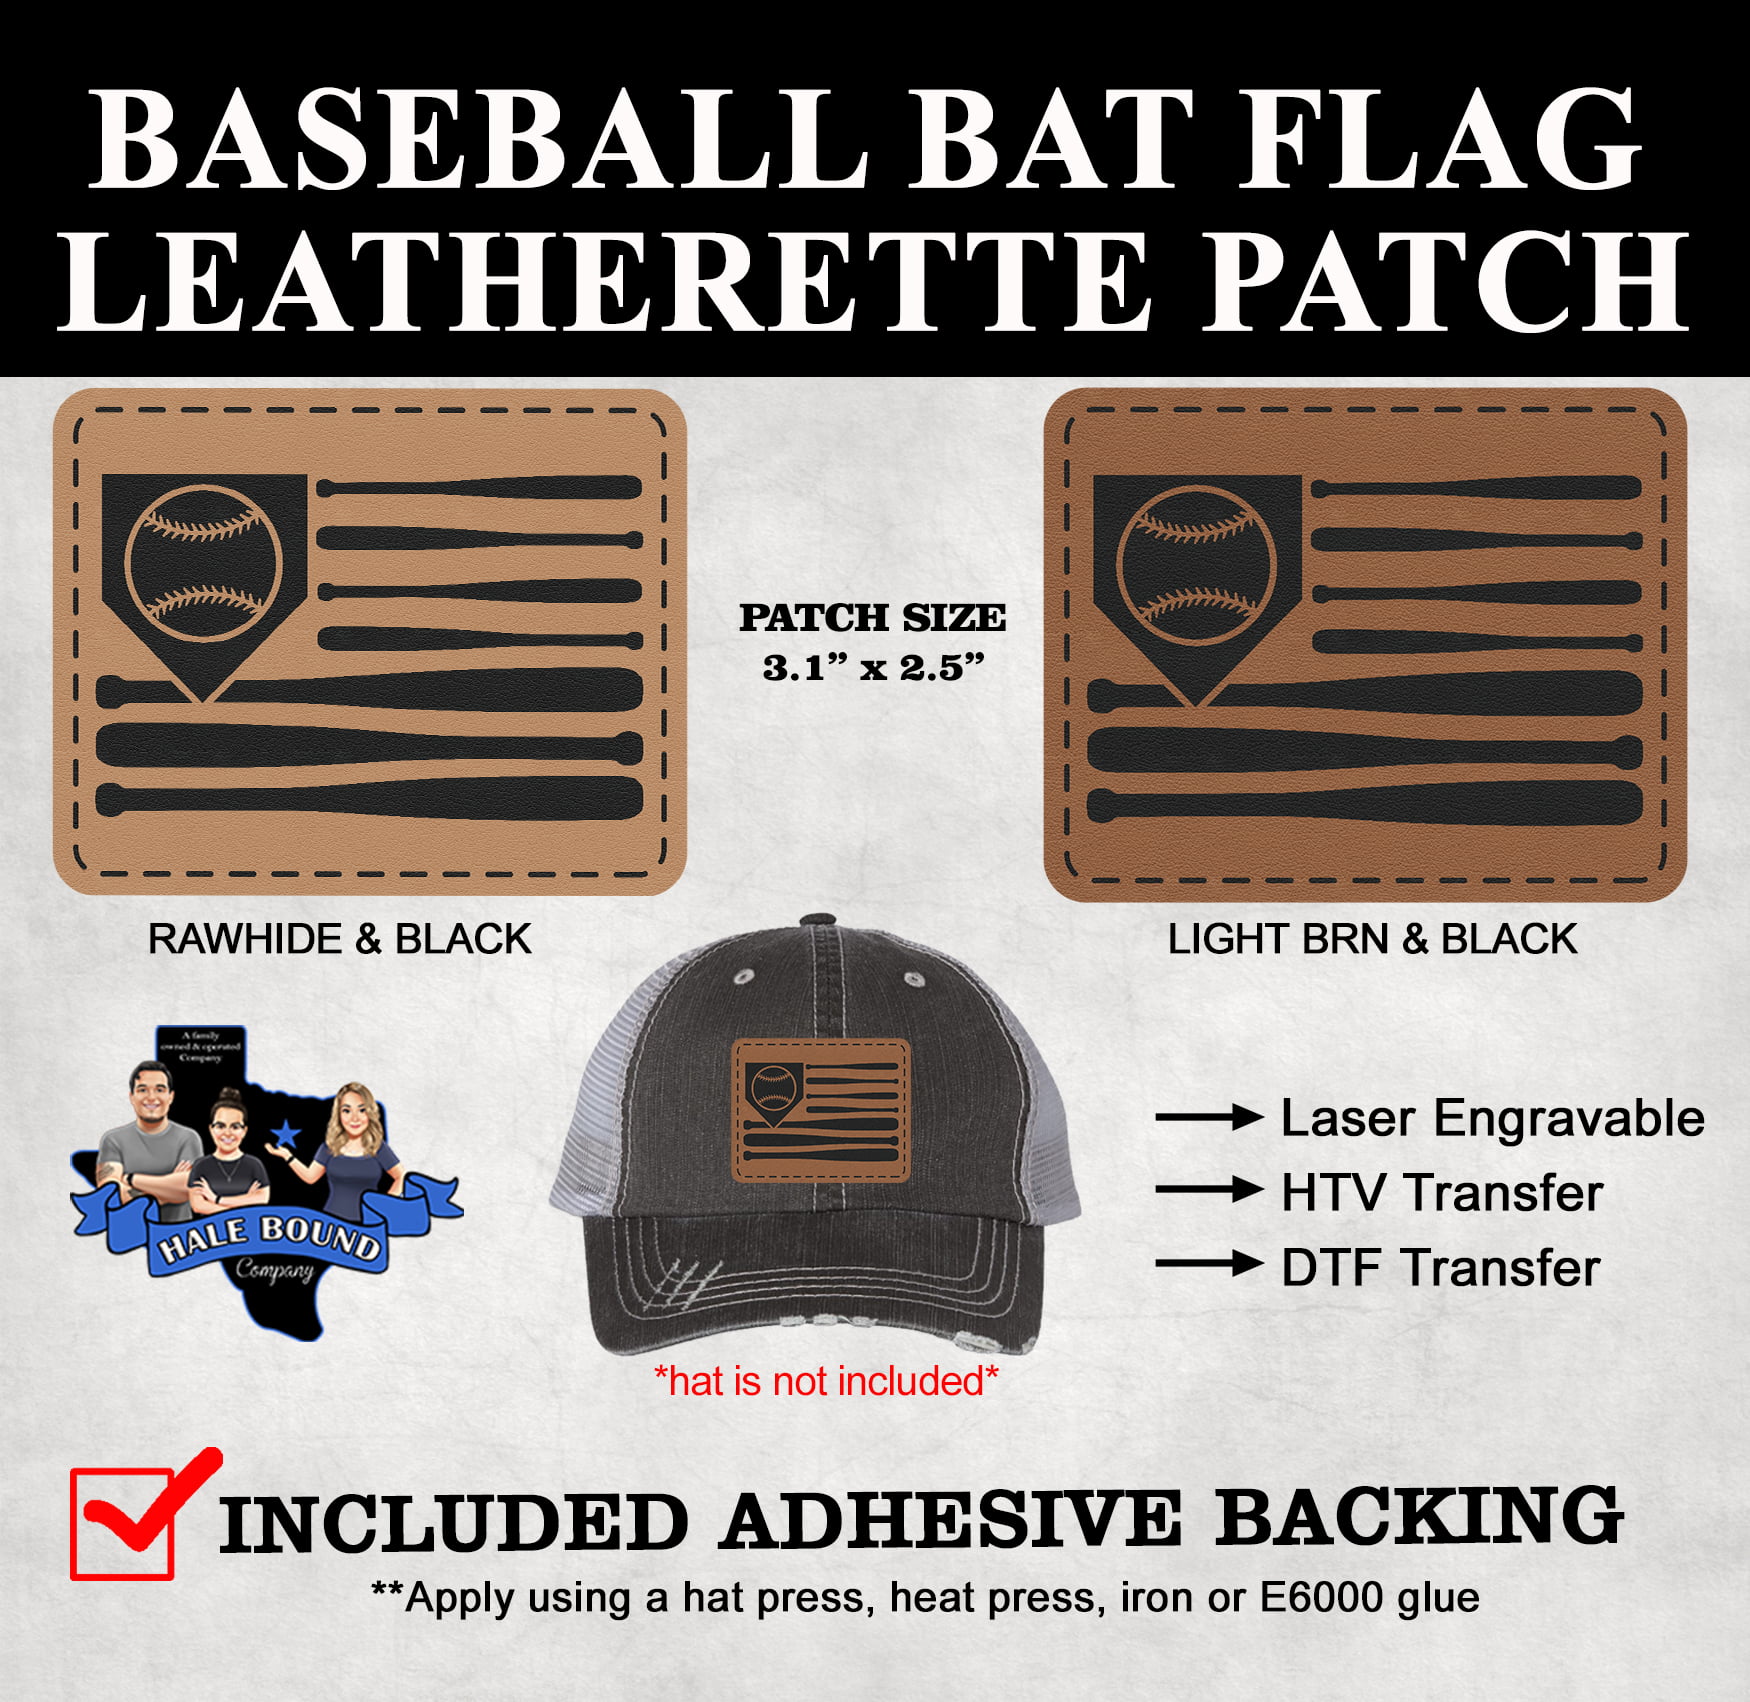 Hale Bound Company - BASEBALL BAT FLAG LEATHERETTE PATCH